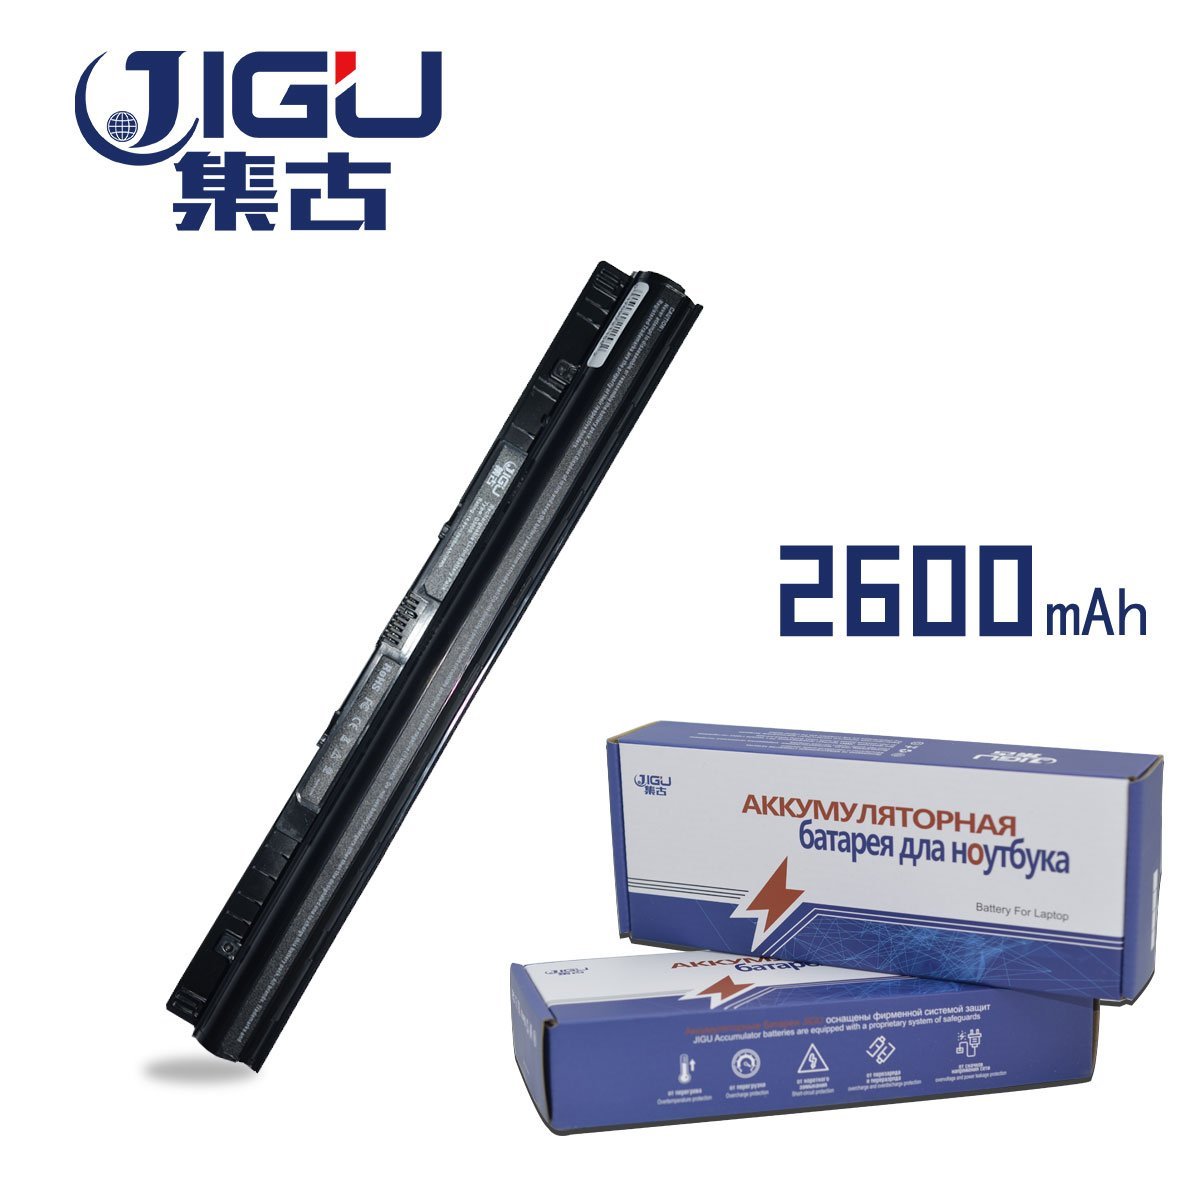 JIGU High Qualiy Laptop Battery FOR LENOVO L12M4A02 L12M4E01 L12S4A02 L12S4E01 IdeaPad G400s G410s G500s S510p S410p Z710 GreatEagleInc